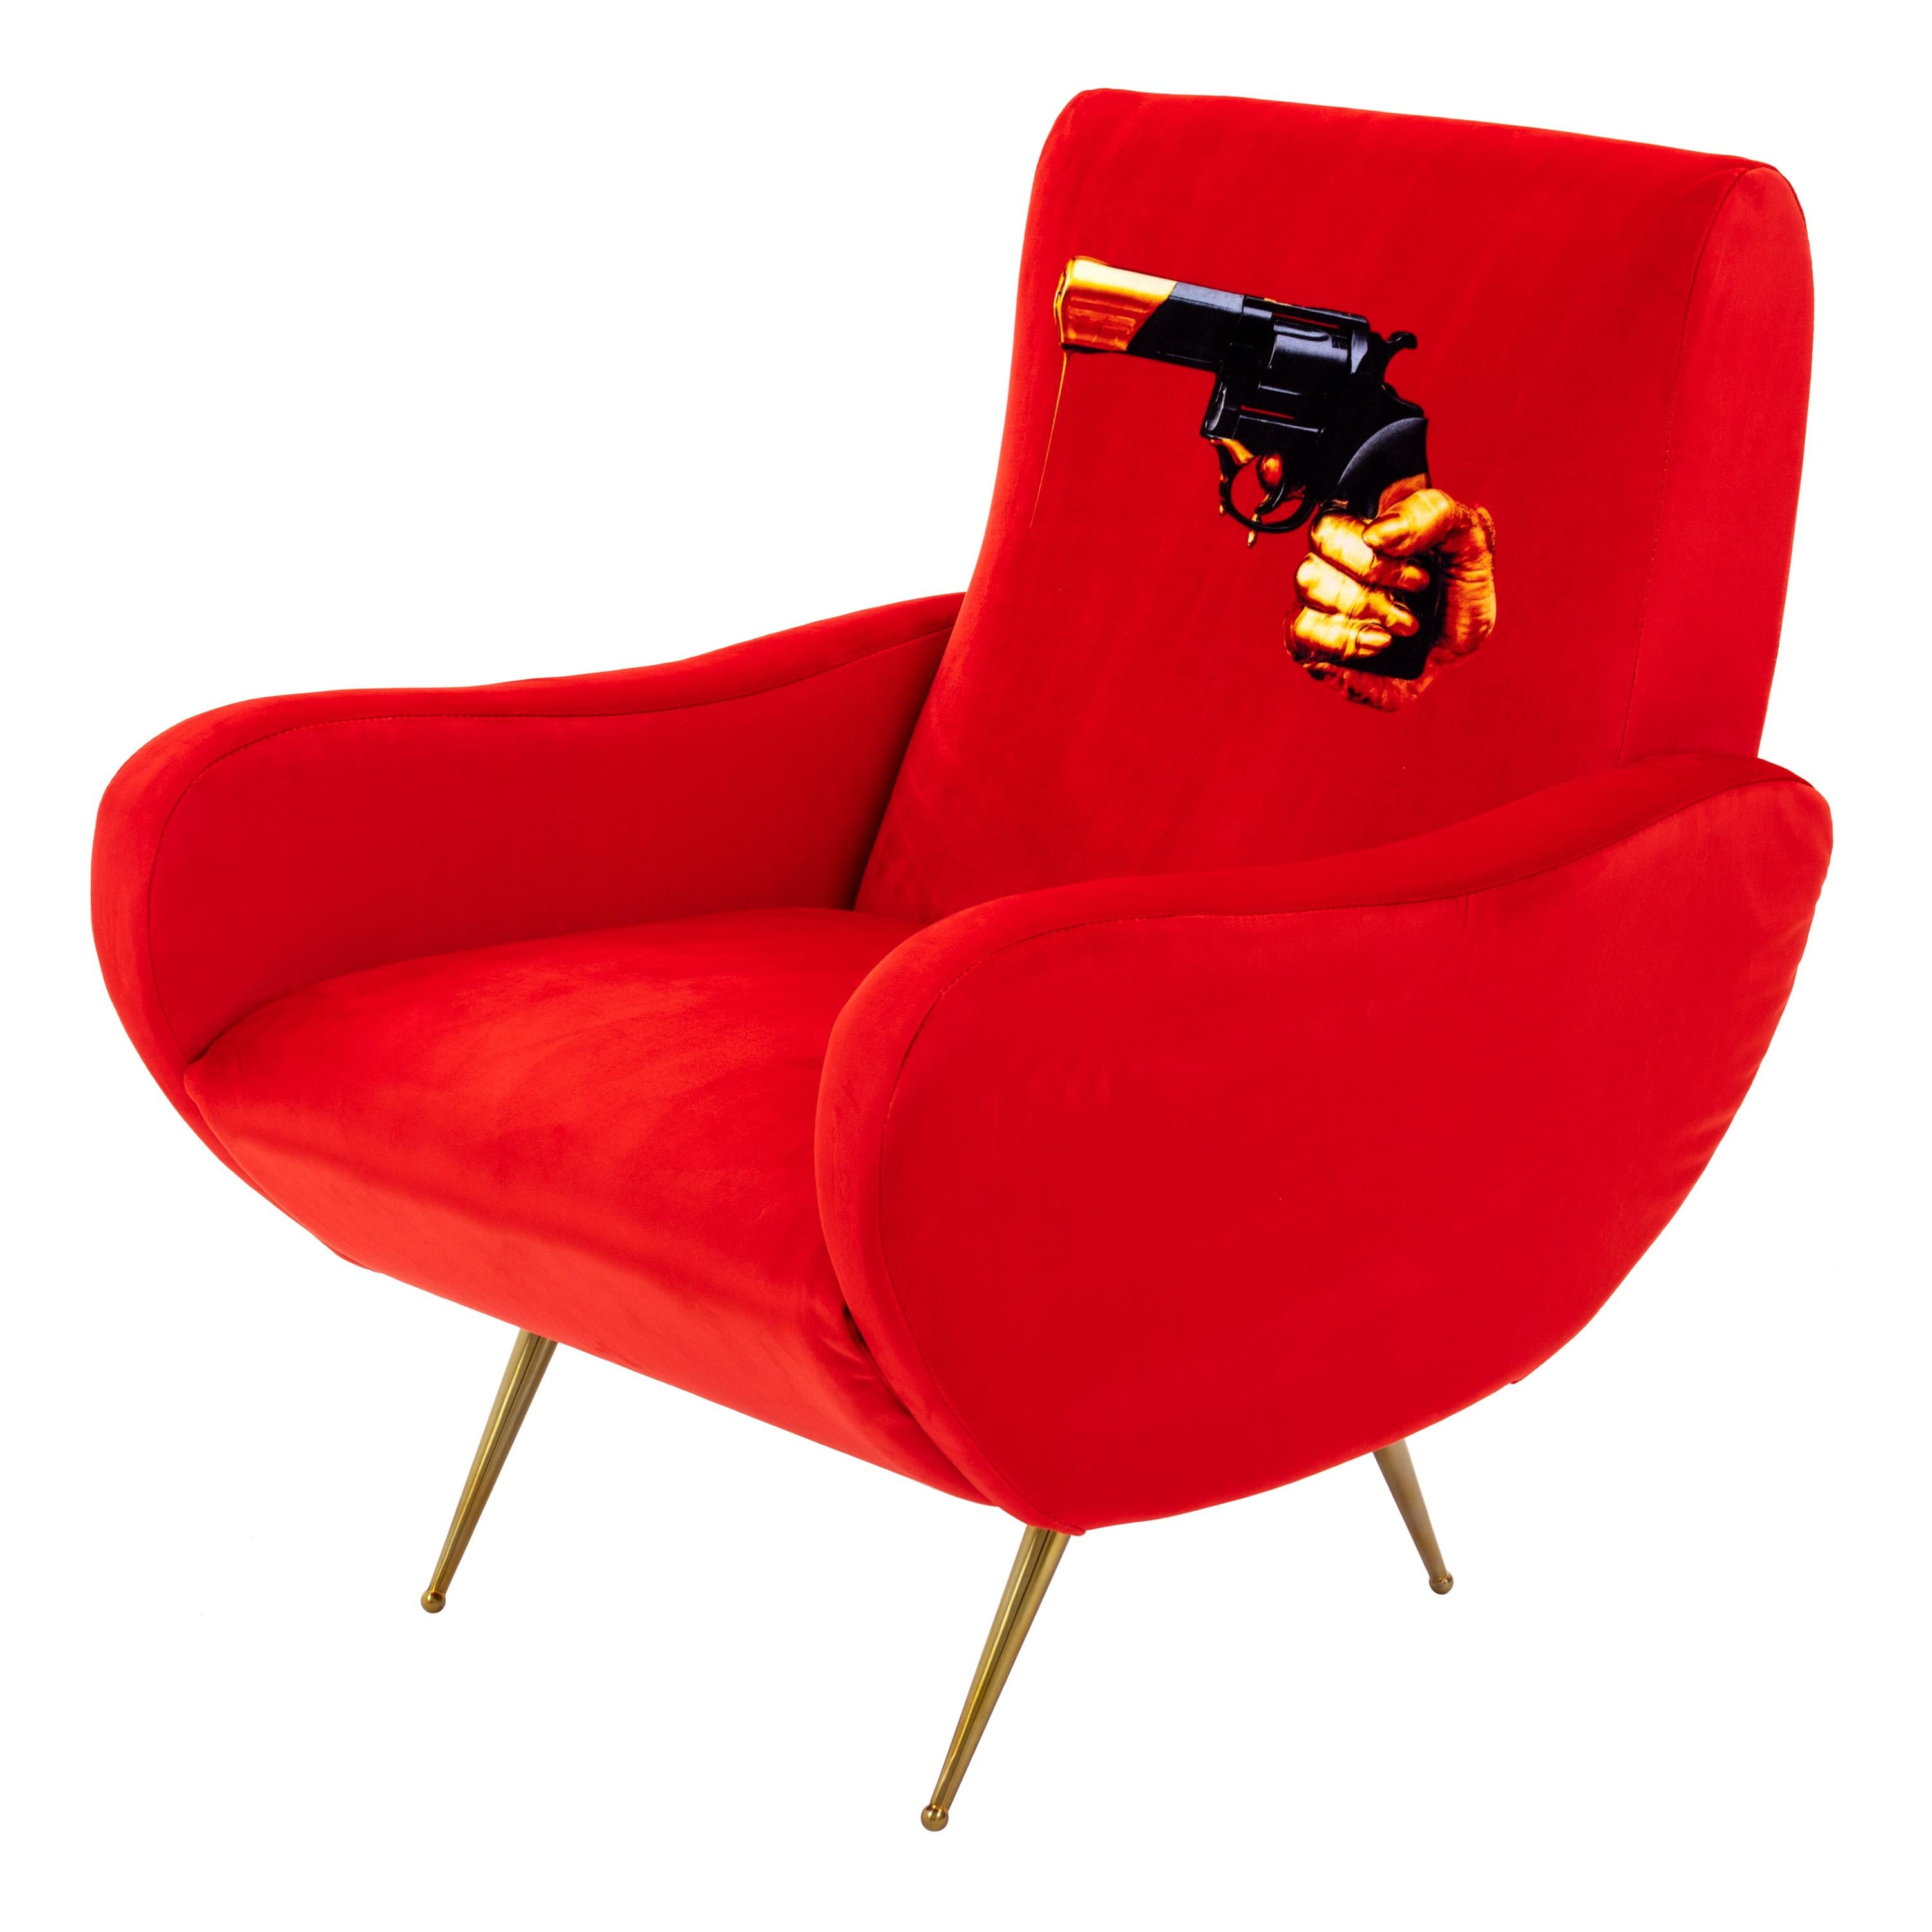 Seletti "Revolver" Upholstered Armchair by Toiletpaper Magazine